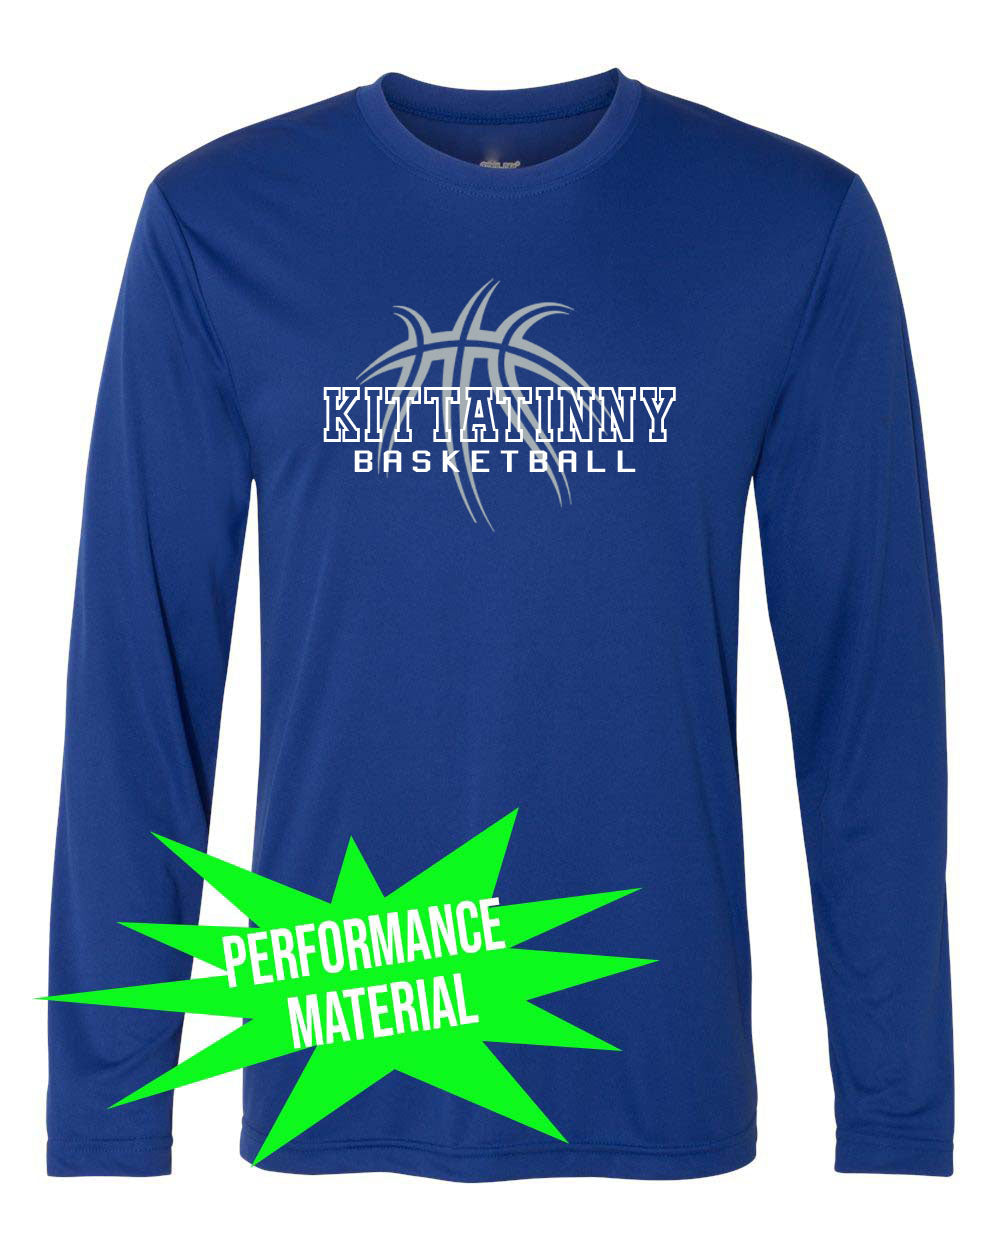 Kittatinny Basketball Performance Material Design 4 Long Sleeve Shirt